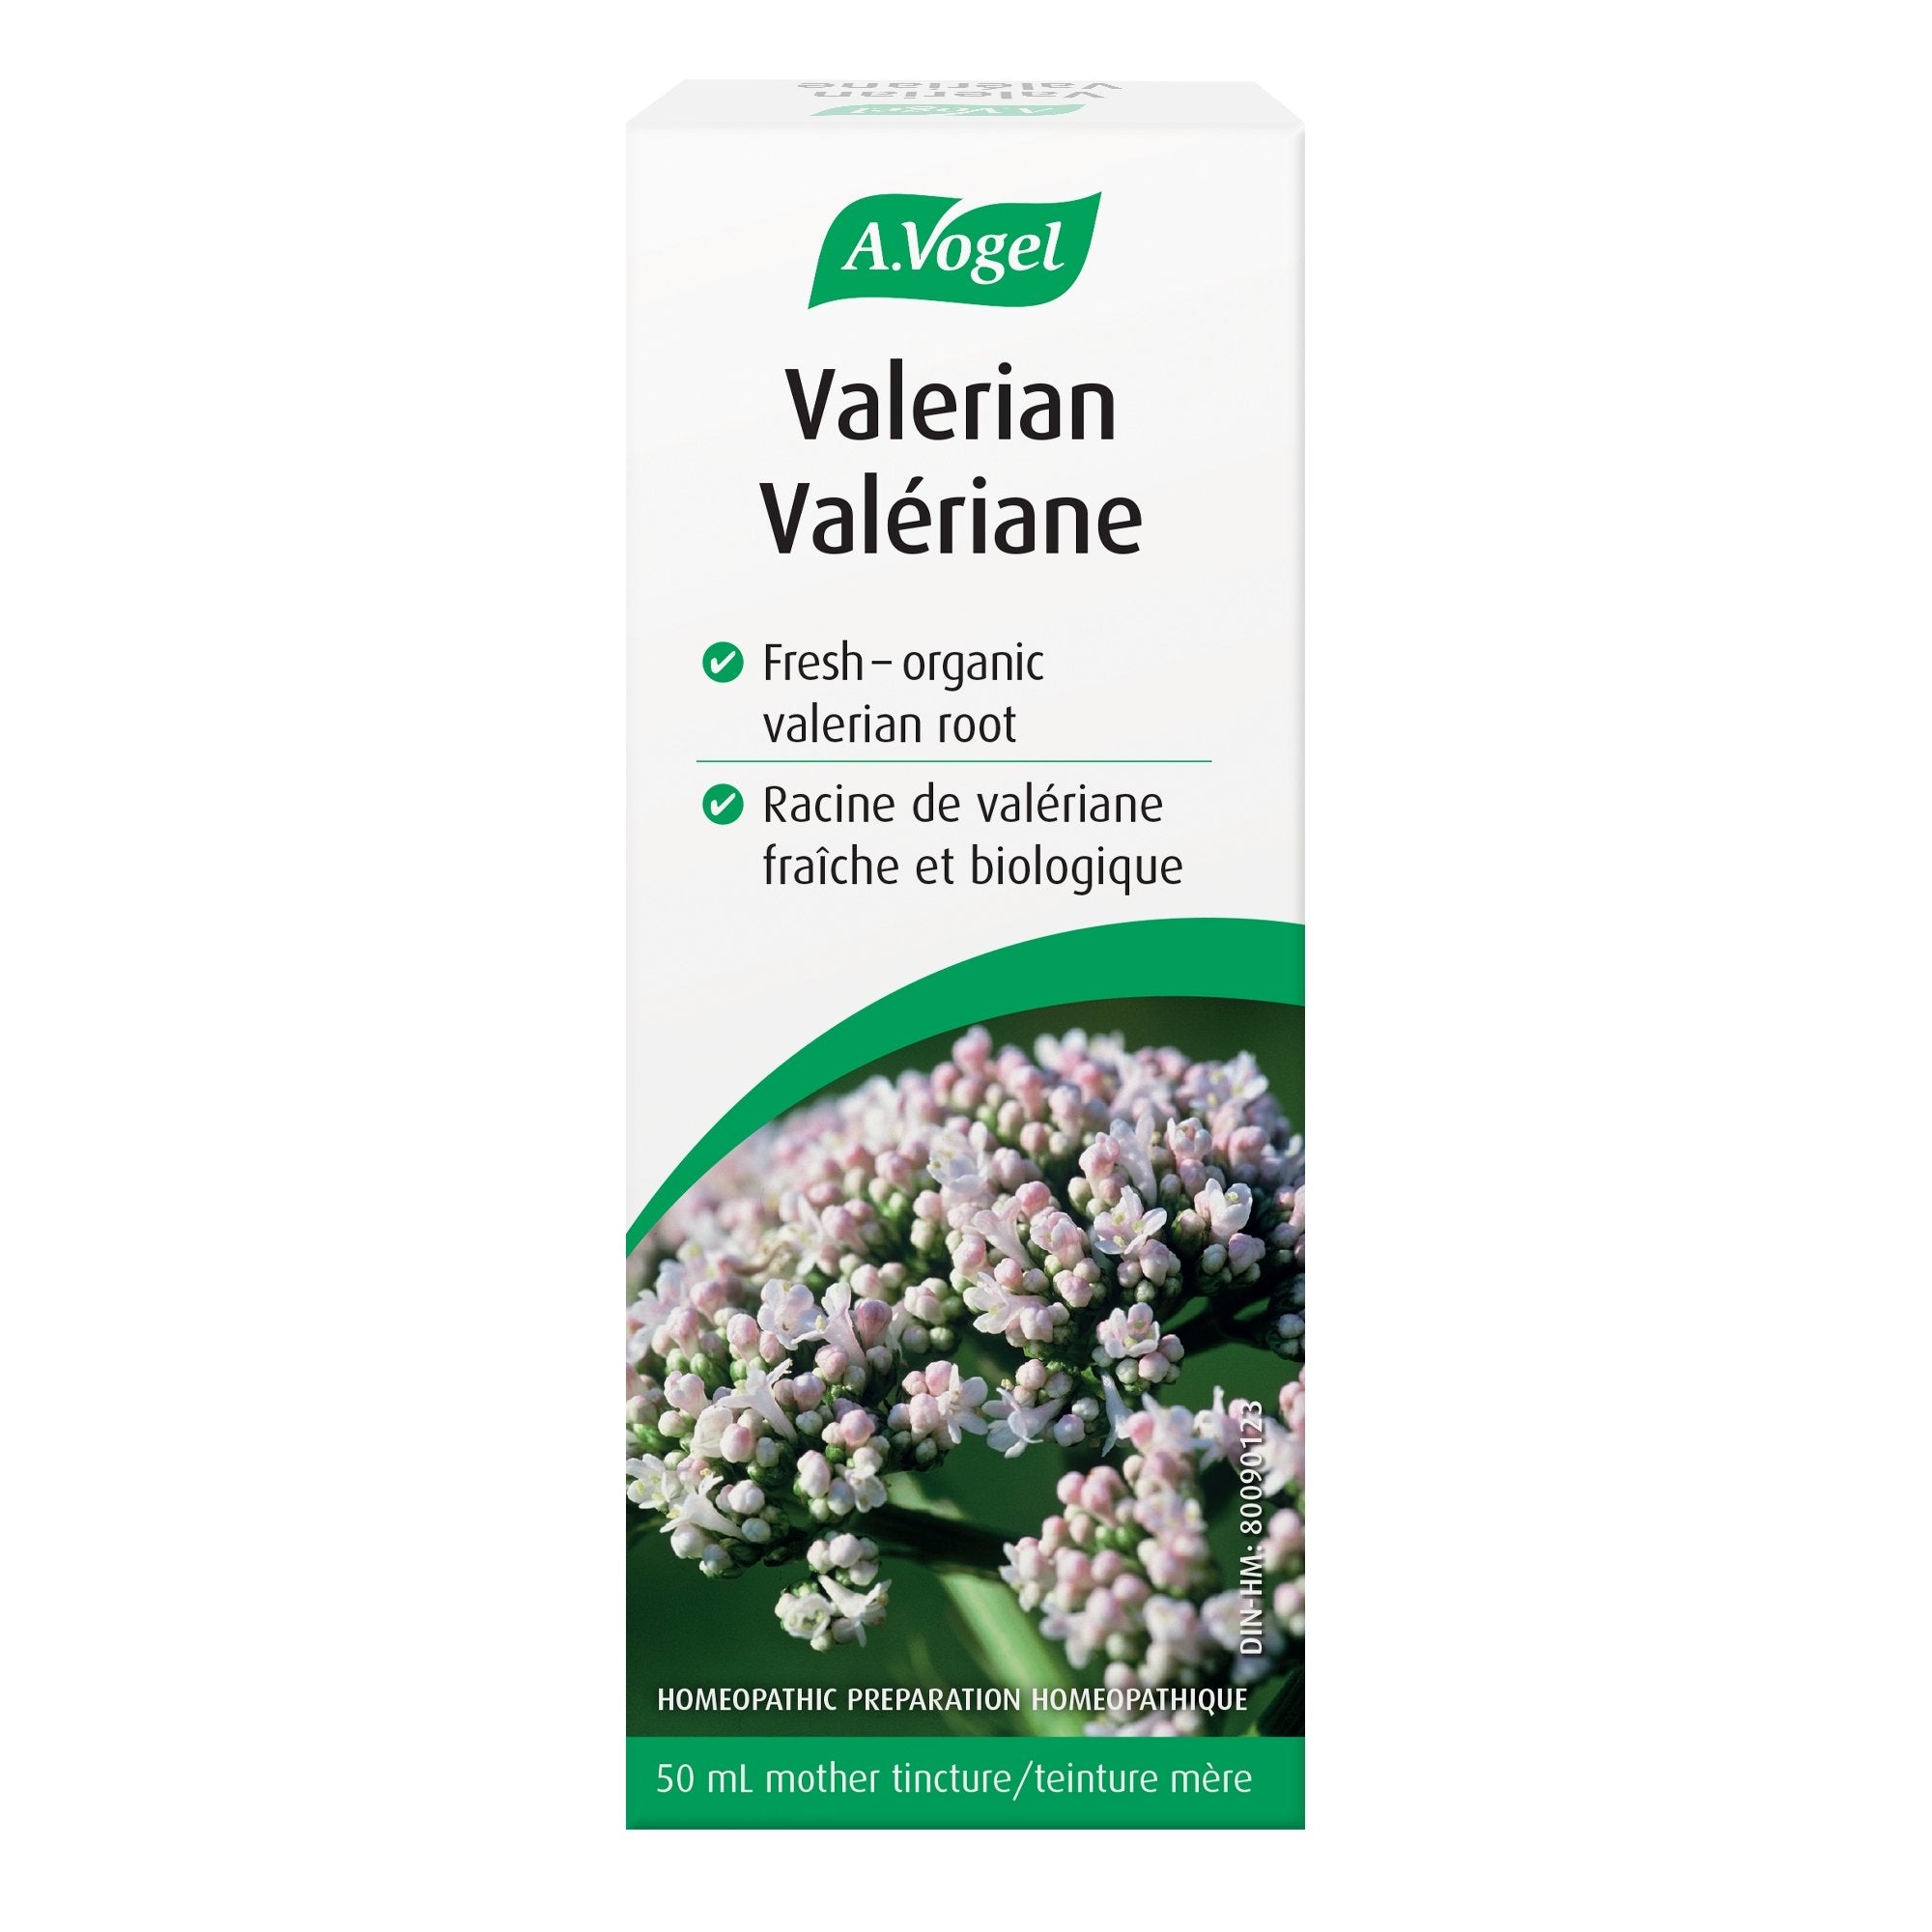 A.Vogel Valerian - Fresh Organic Valerian Root 50mL - A.Vogel Canada